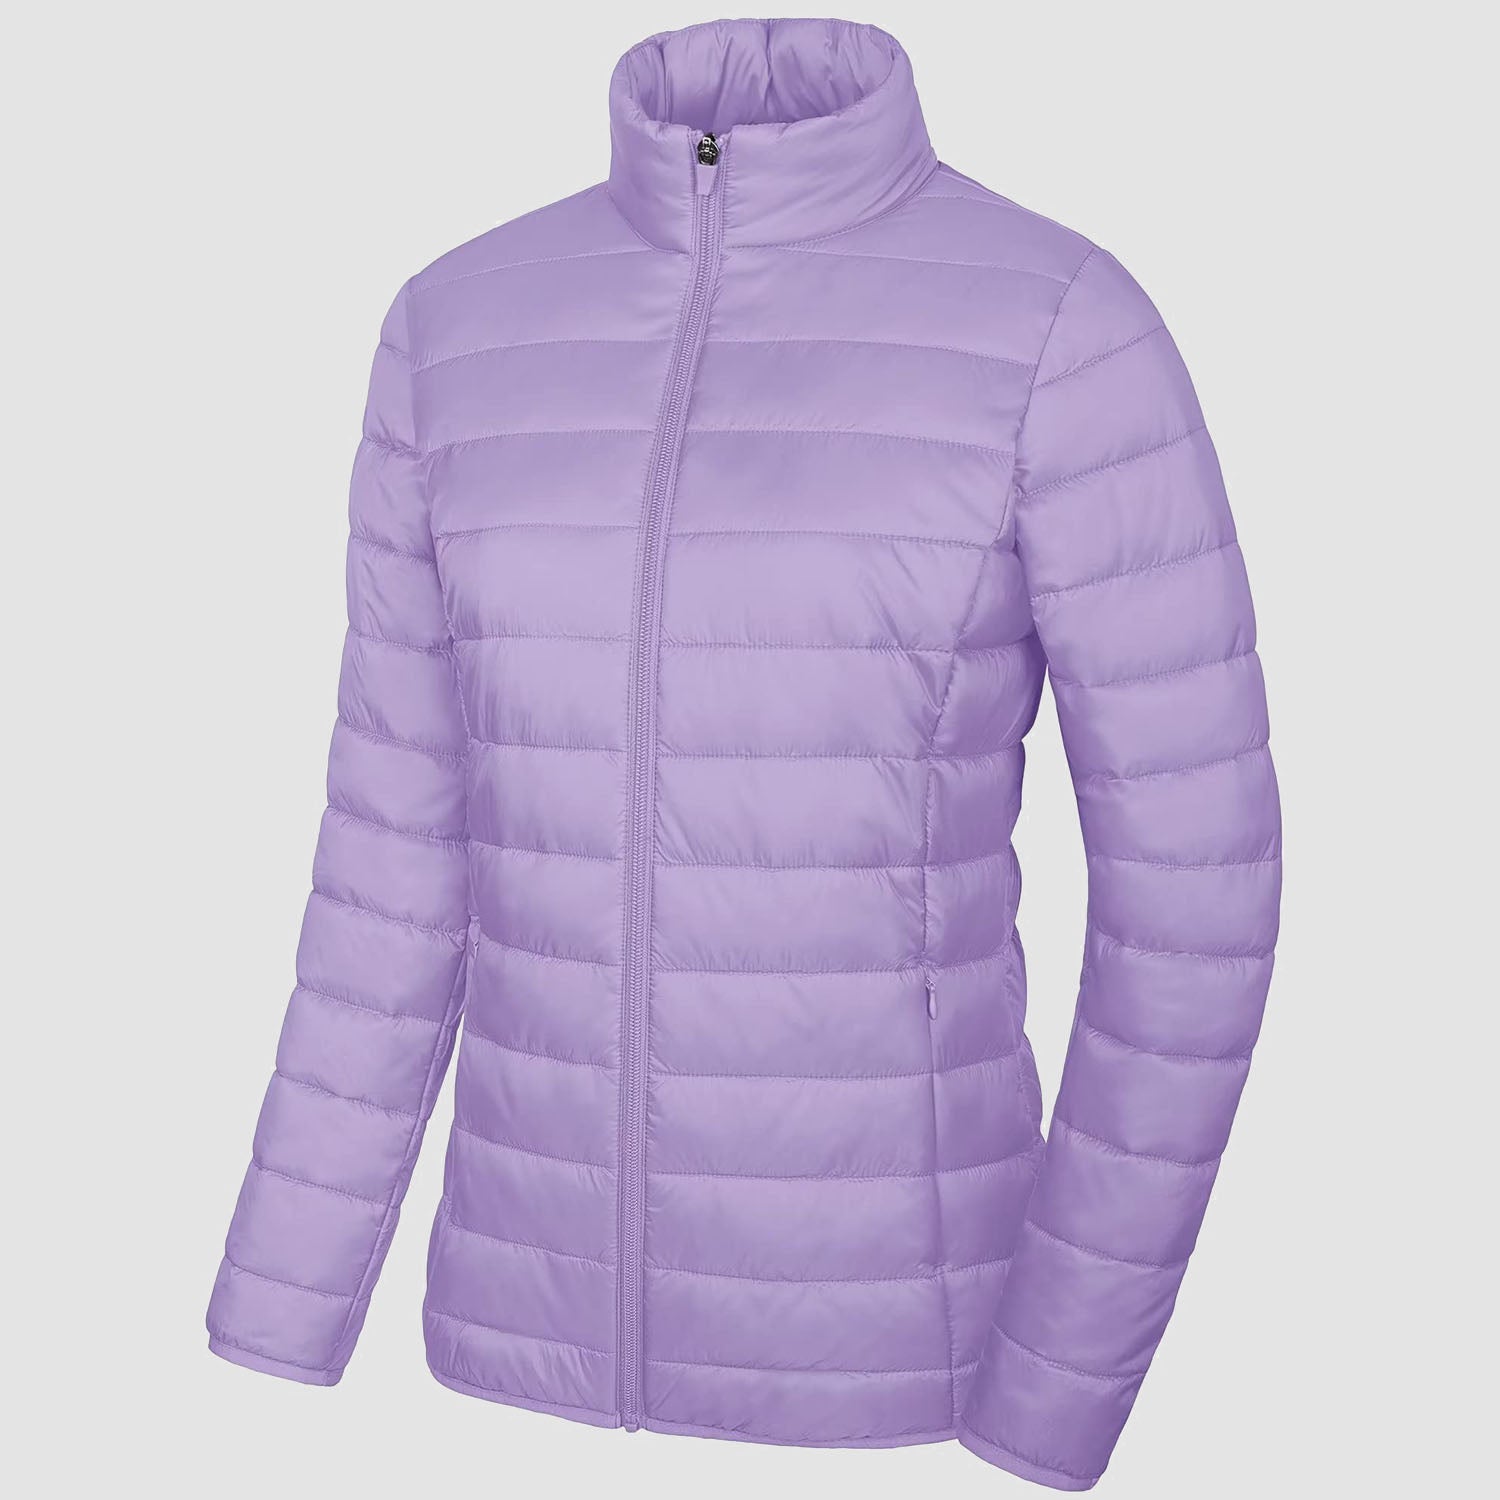 Clearance Sale - Millet - Women's - LD Composite Primaloft - pink Jacket -  size Europa M - / US size S-M / - Goskand Ski & Soccer Store